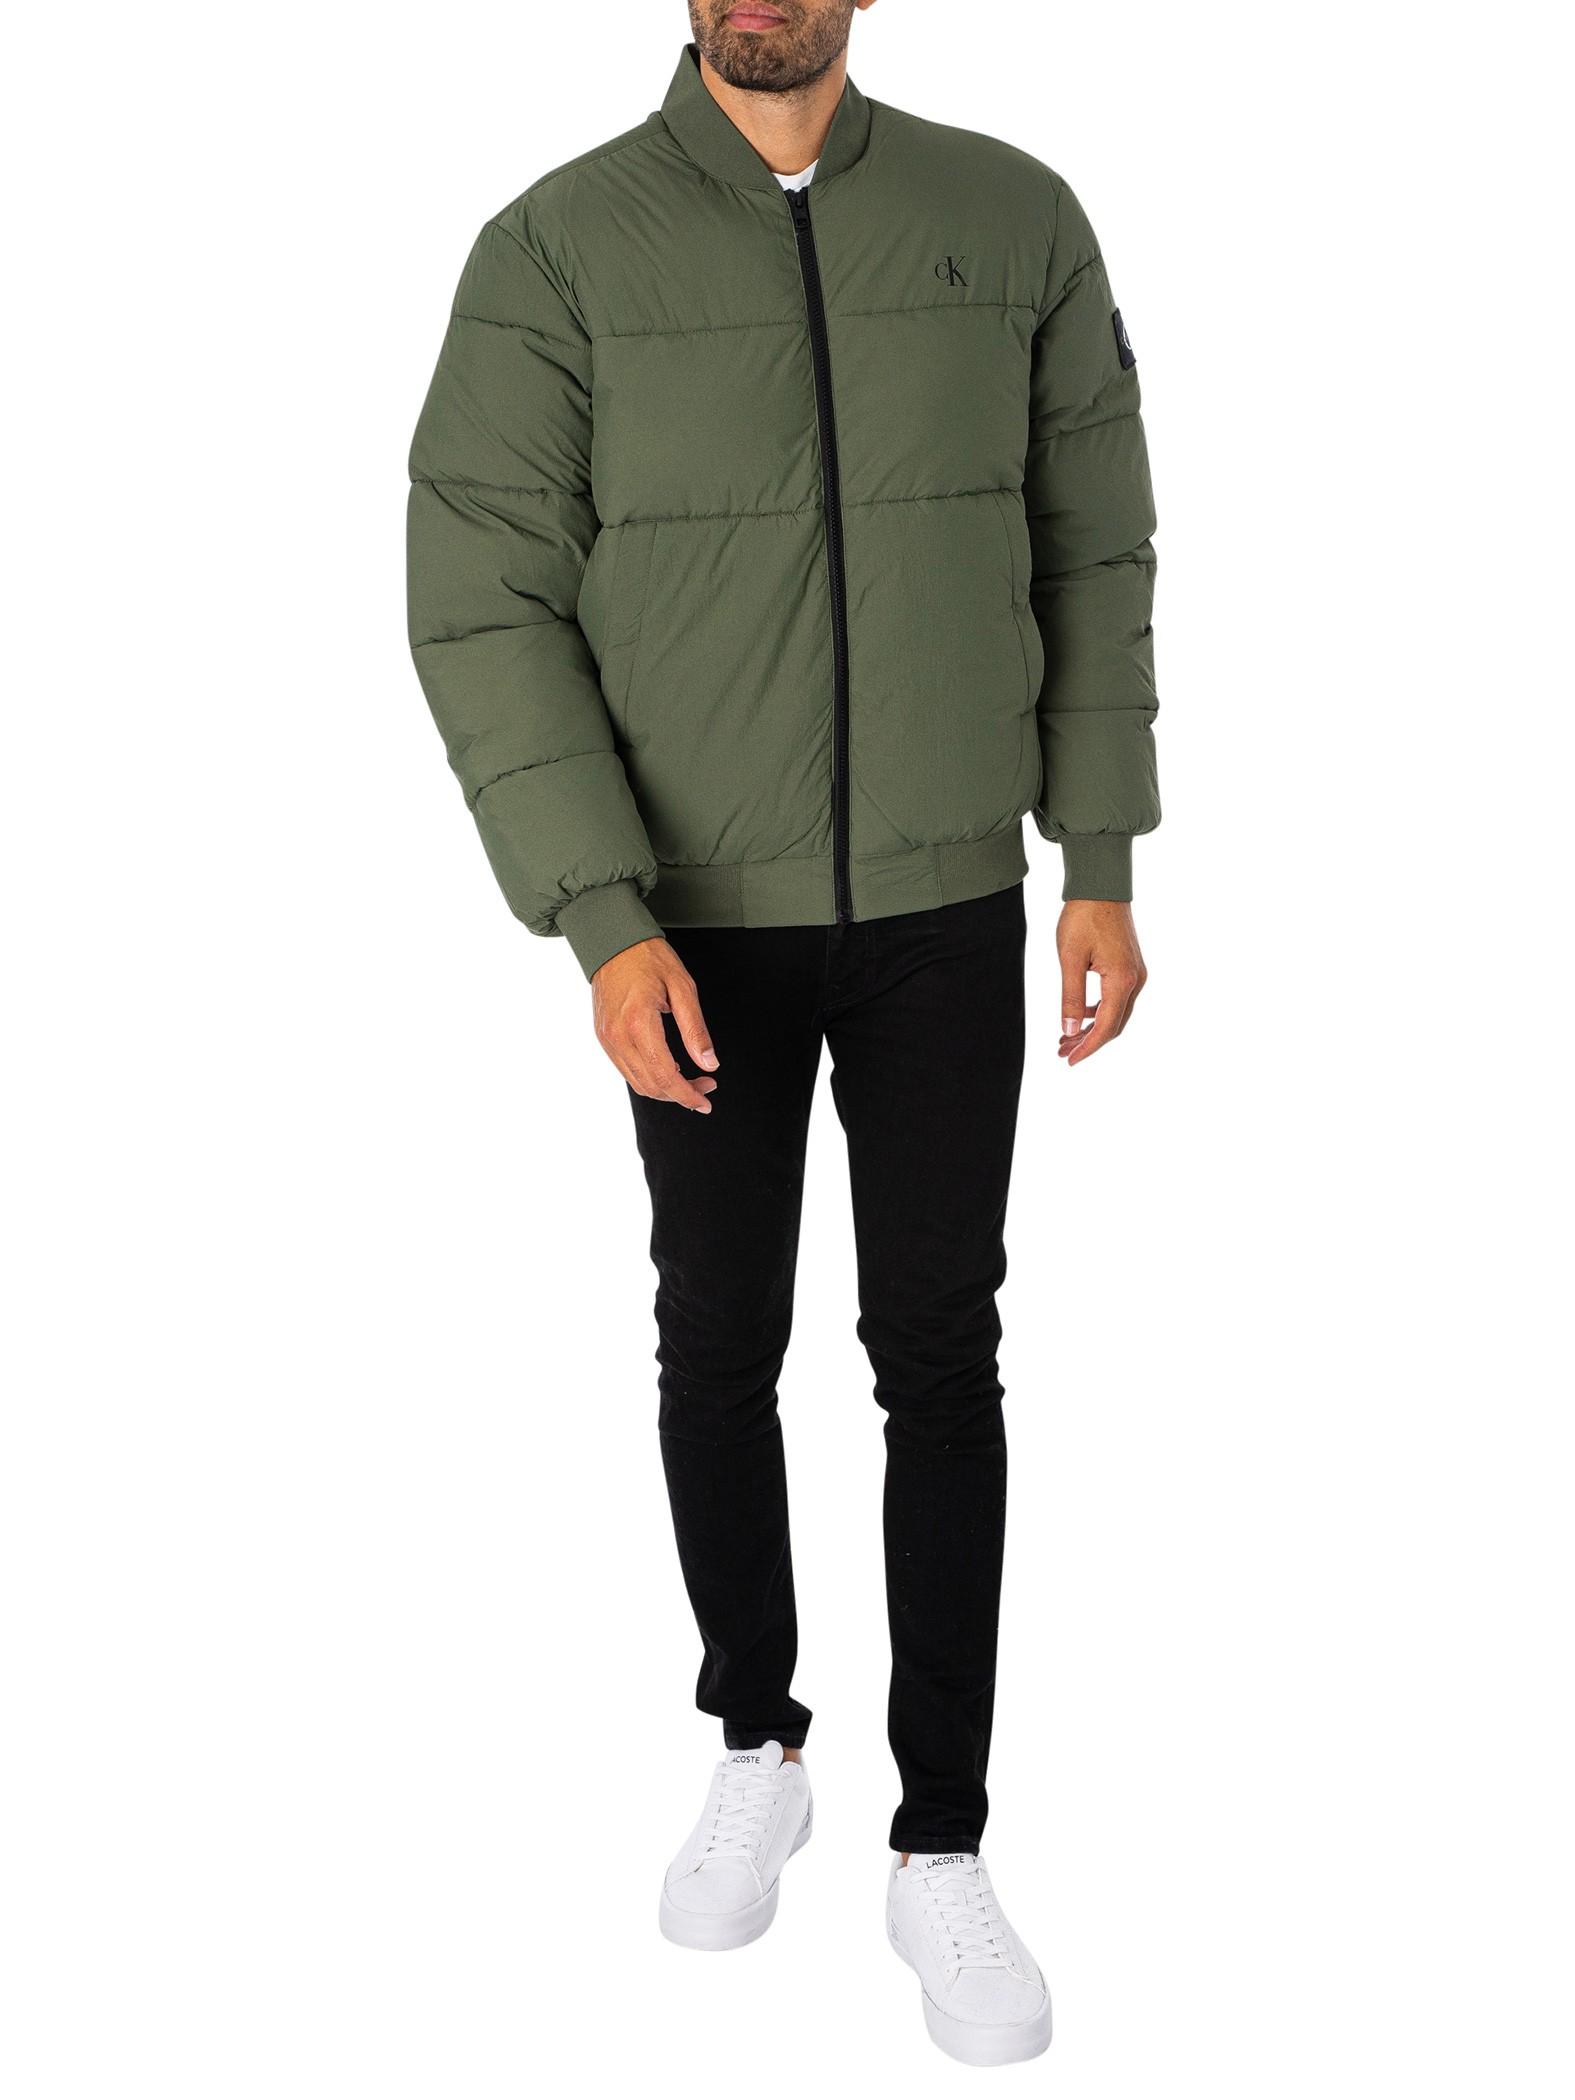 Calvin Klein Jeans Bomber Lyst Men | Commercial in Green for Jacket